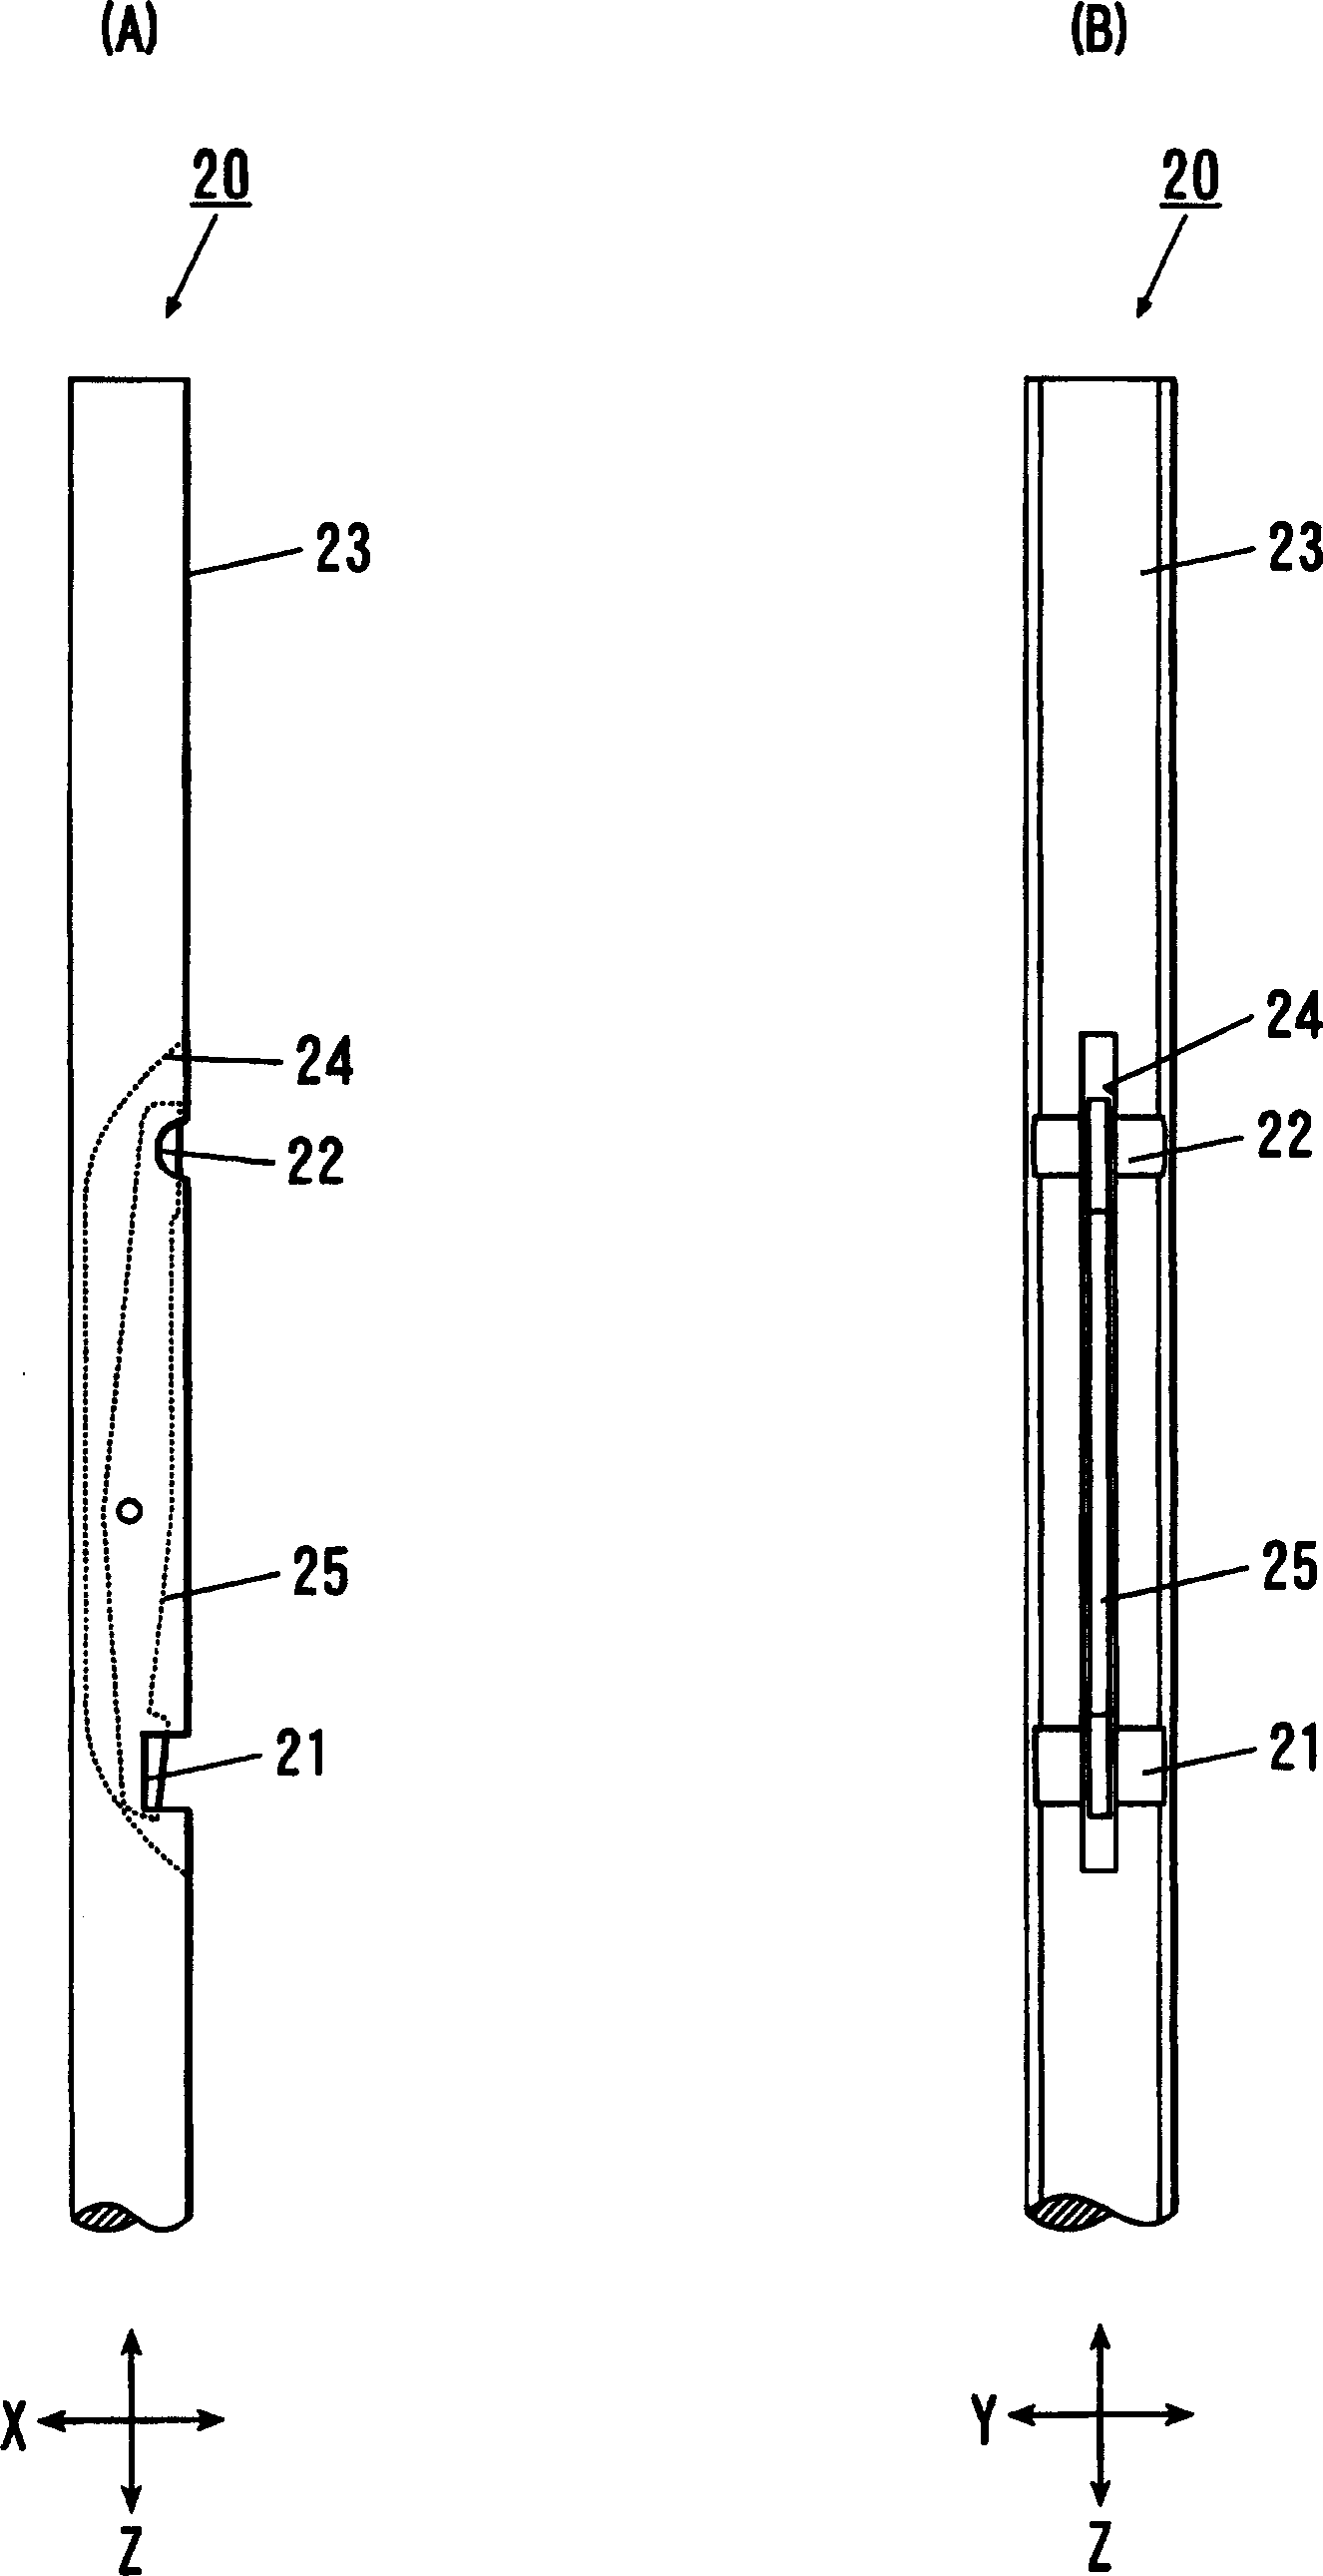 Needle stem mechanism of double-needle sewing machine